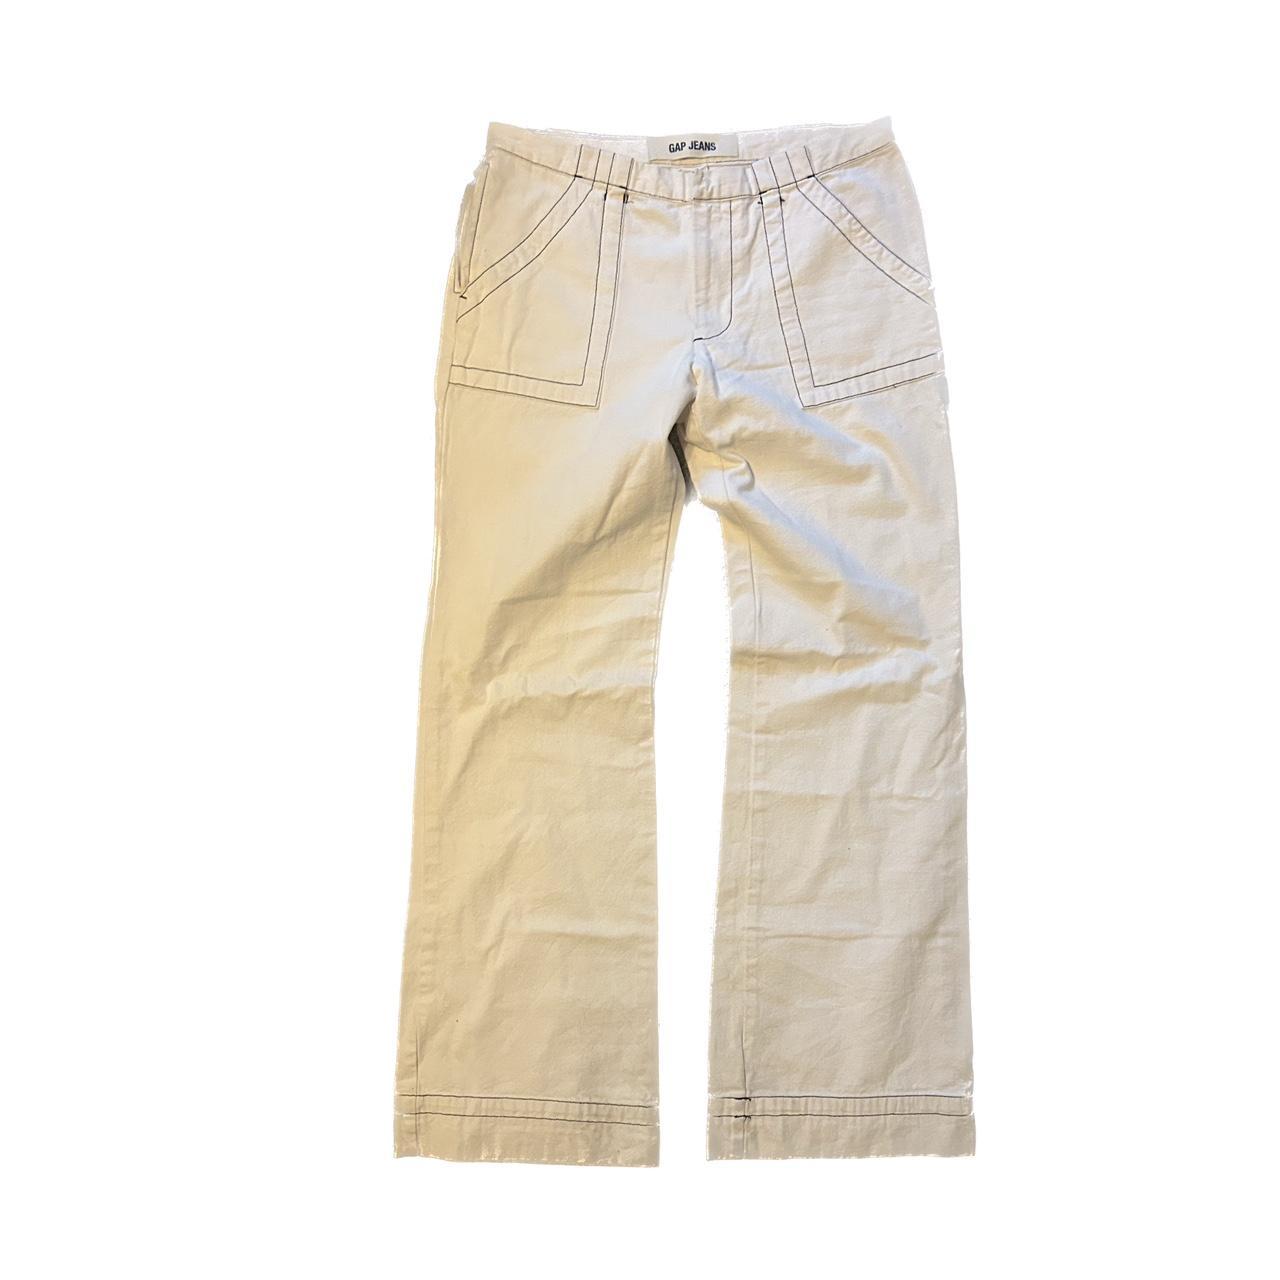 vintage off white gap jeans - size 8 (GAP) - wide... - Depop